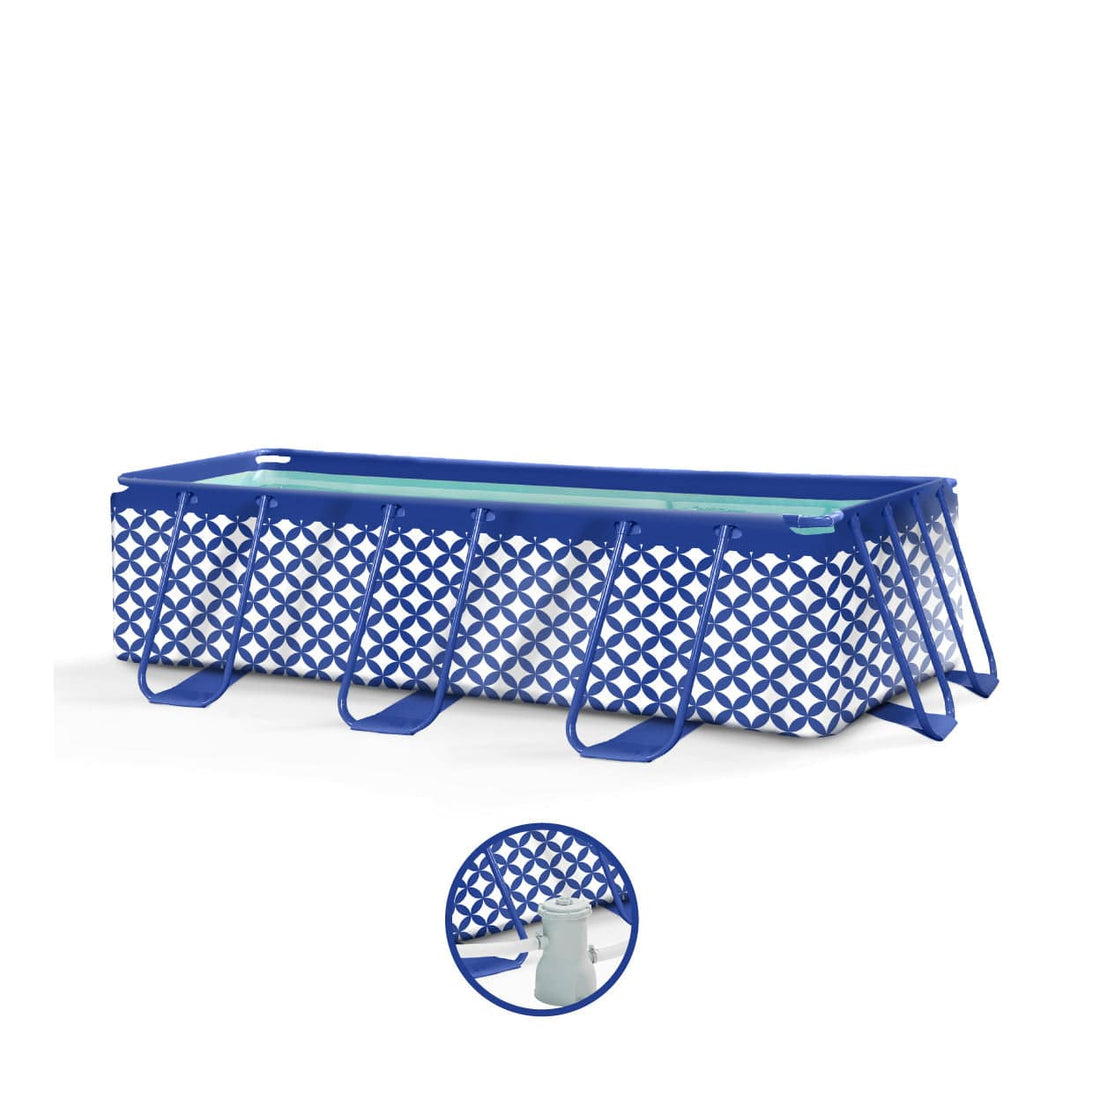 opzetzwembad-400x200x100-cm-blauw-met-accessoires-swim-essentials-1